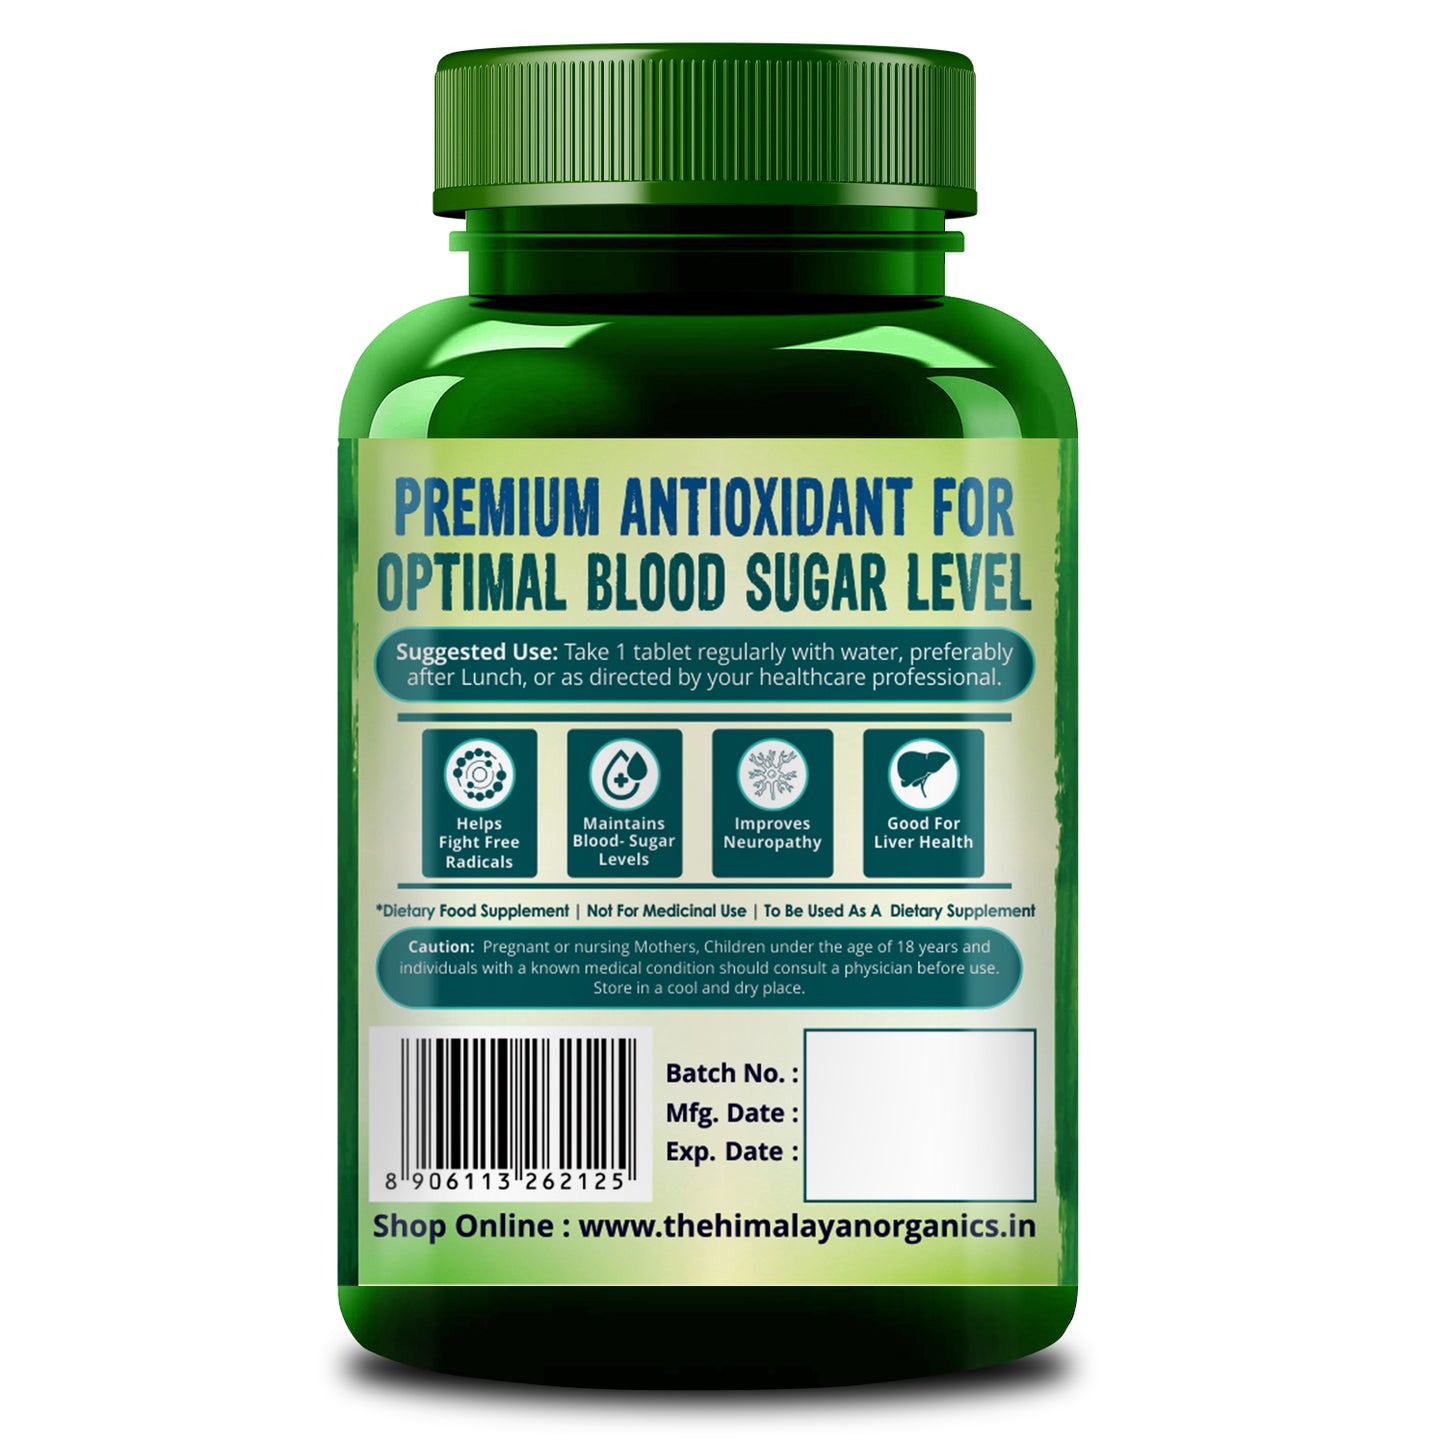 Himalayan Organics Combo Pack of Alpha Lipoic Acid 300mg (60 Tablets) & Vegan Omega 3 6 9 (90 Capsules) - For Healthy Heart